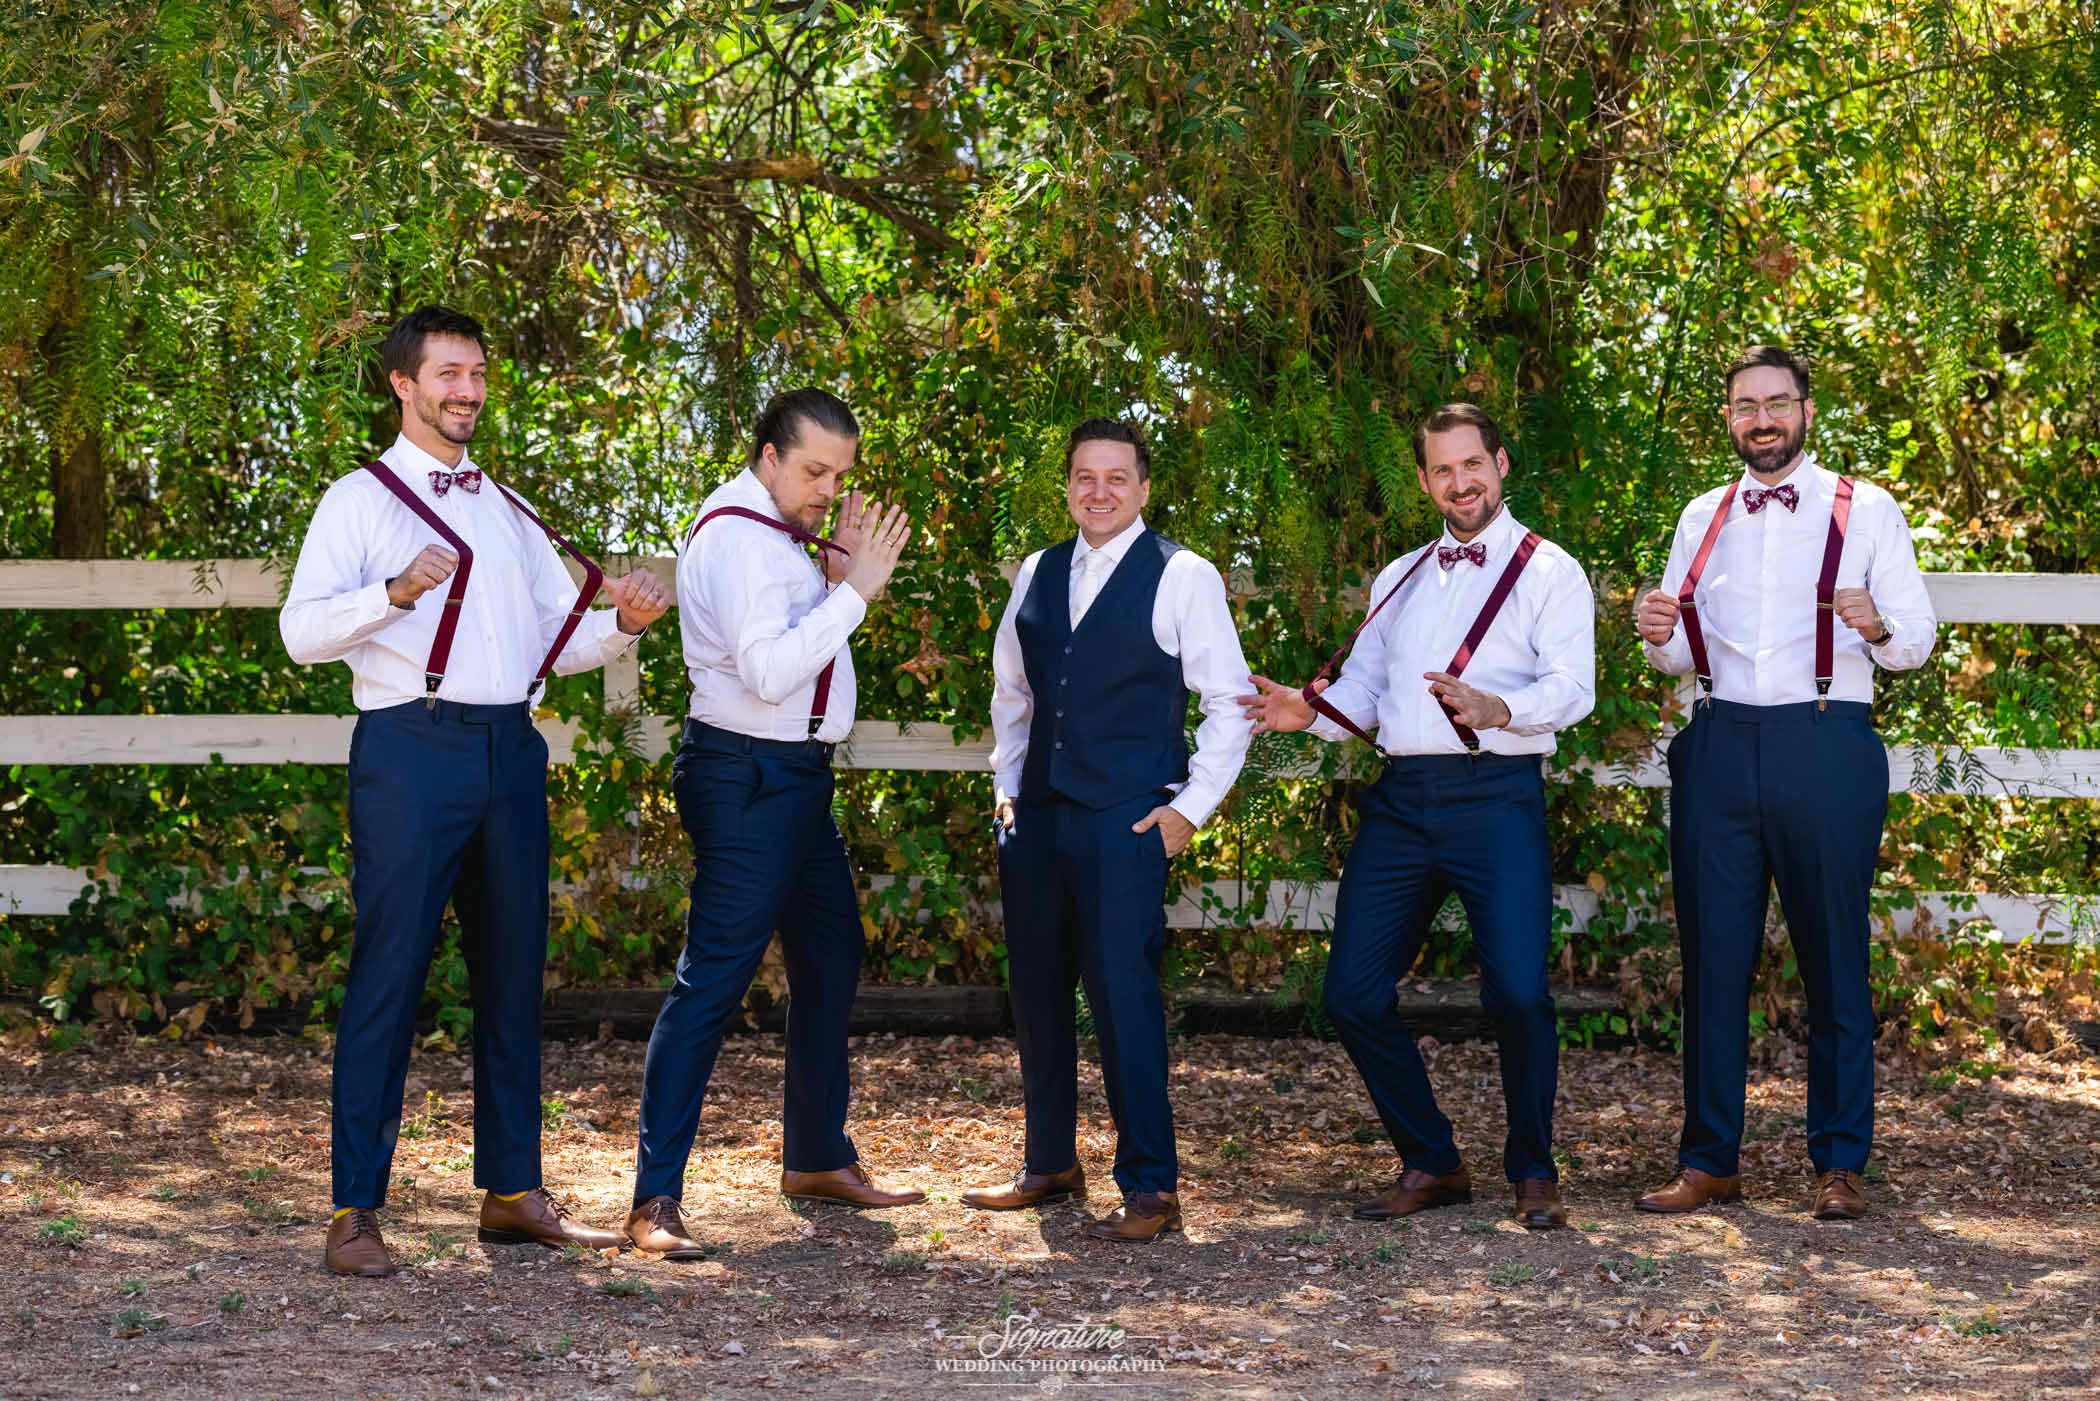 Groom with groomsmen in suspenders